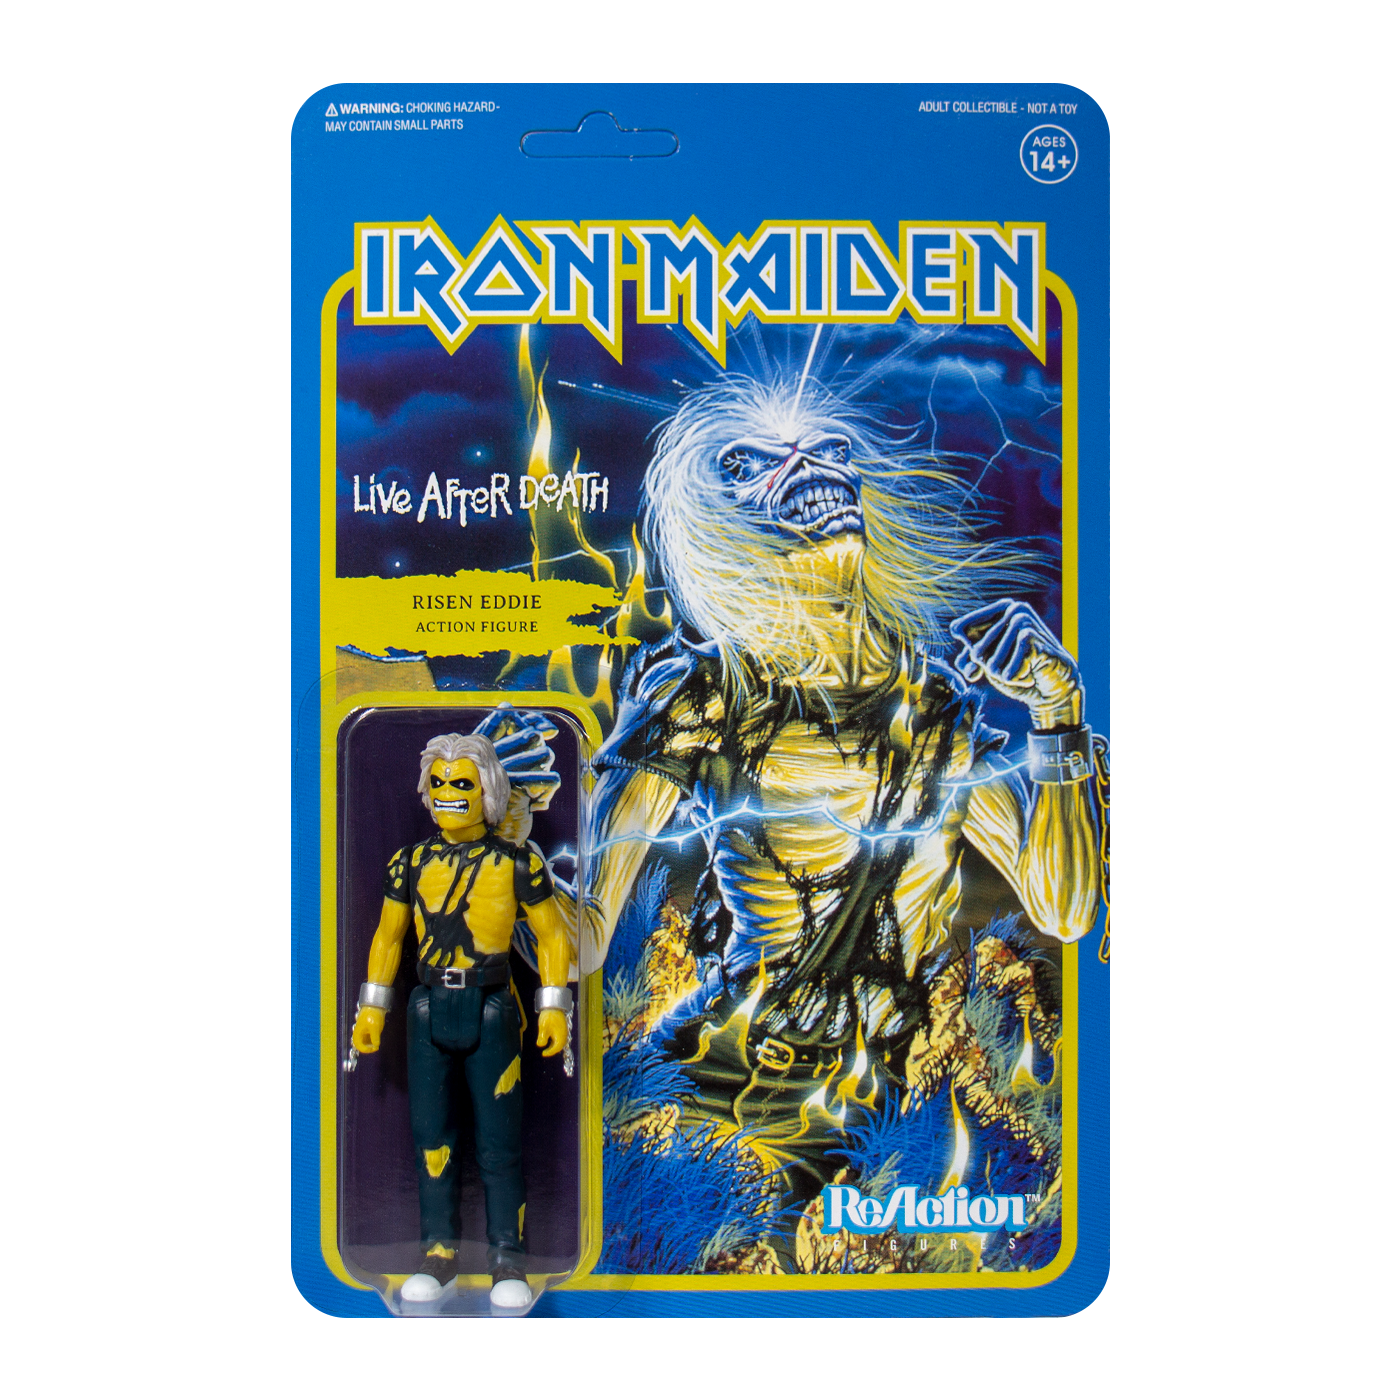 Iron Maiden ReAction Figure - Live After Death (Album Art) by Super7